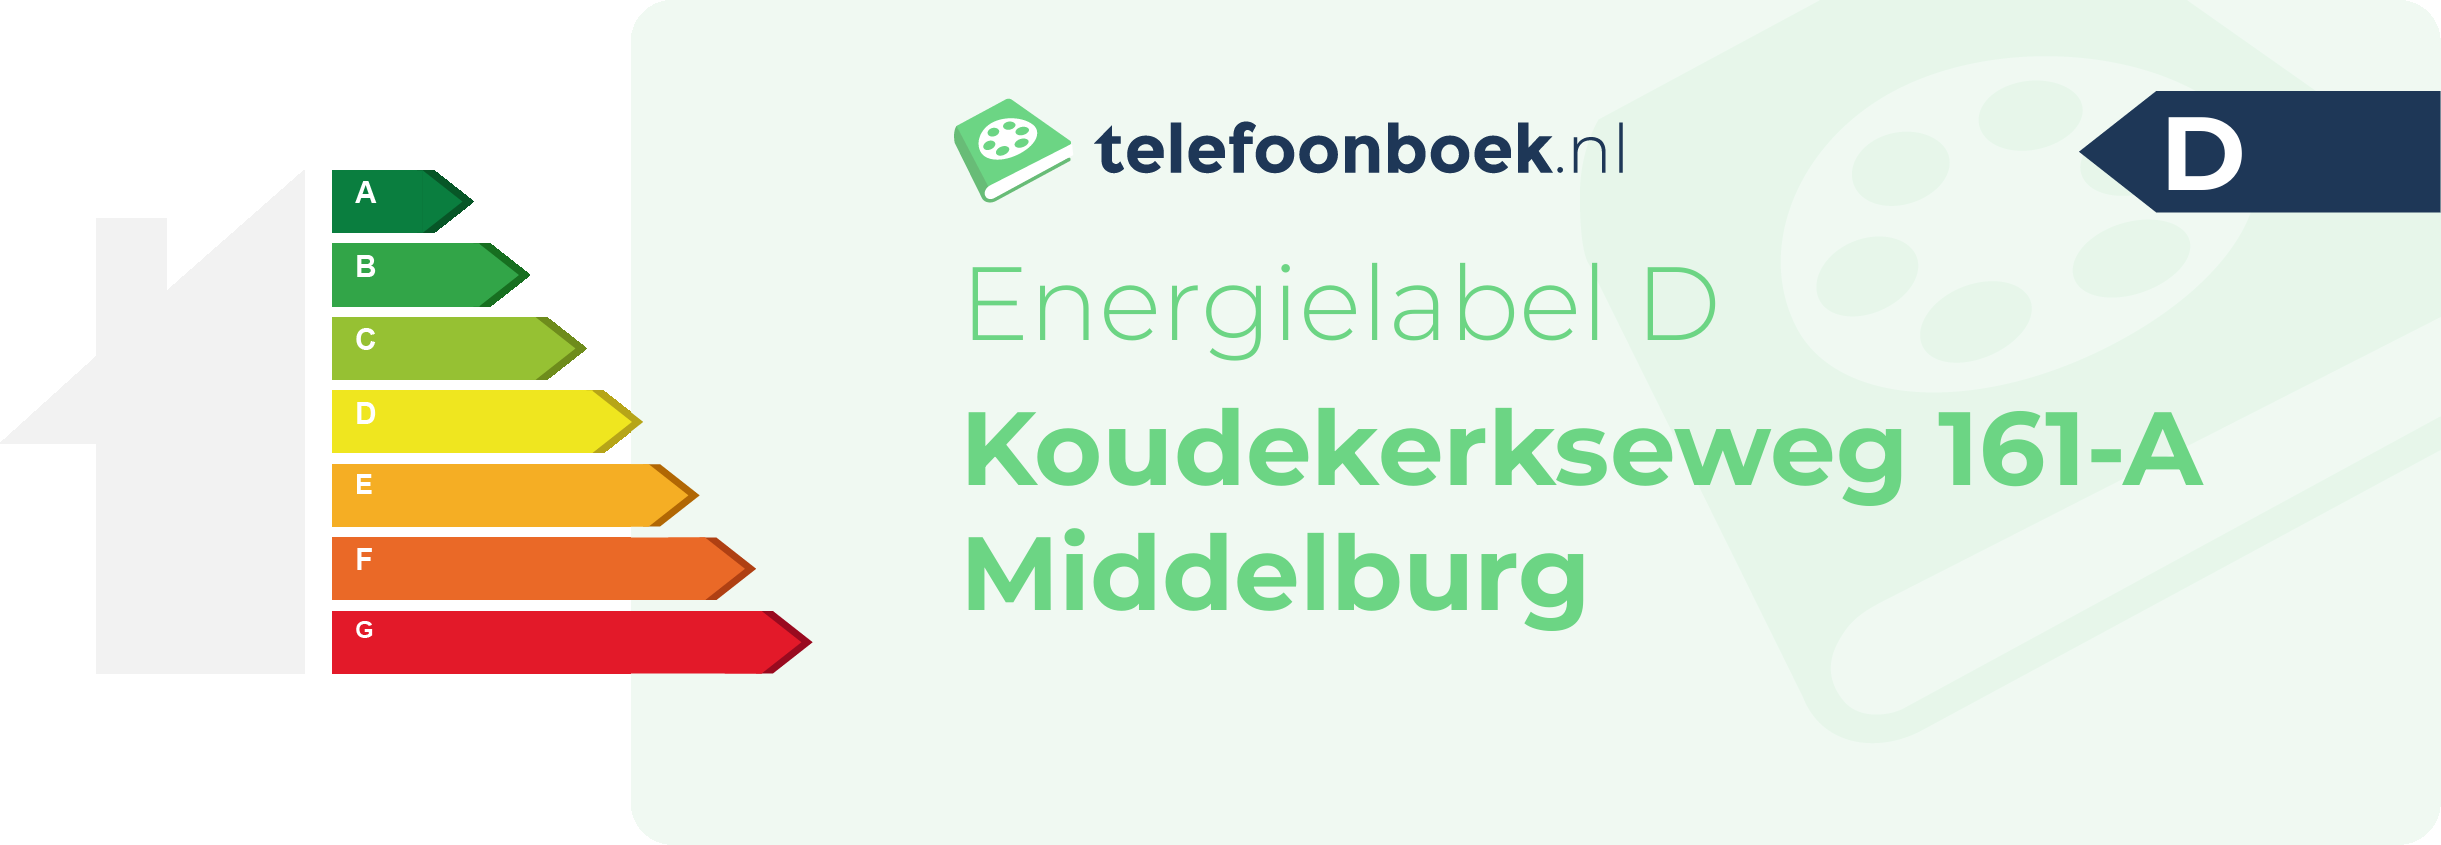 Energielabel Koudekerkseweg 161-A Middelburg